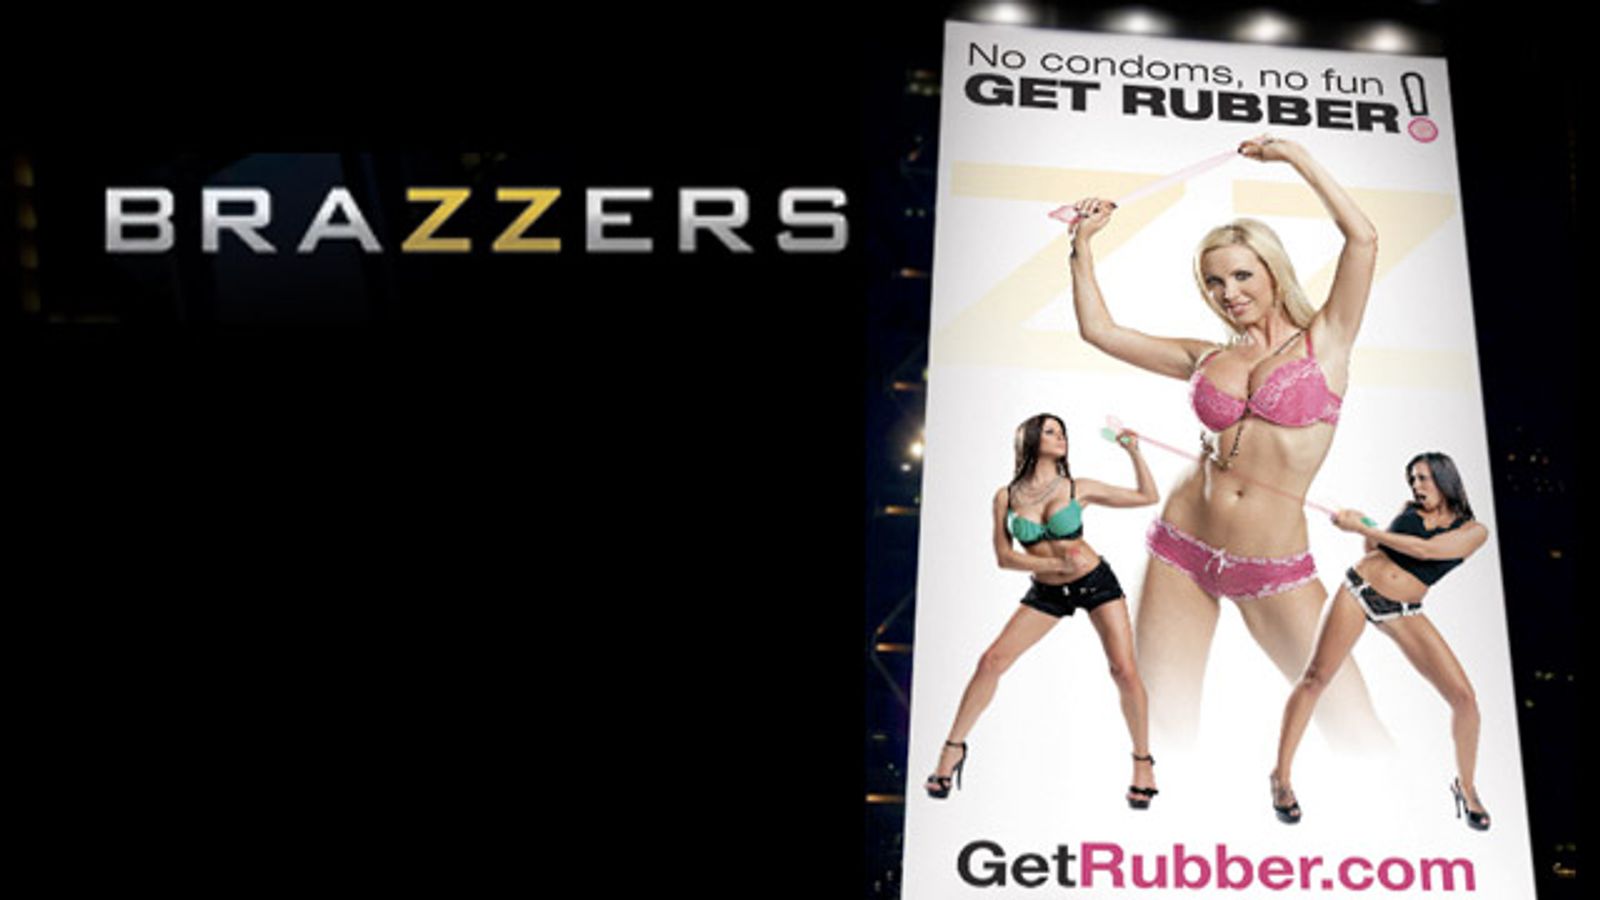 Brazzers’ Get Rubber! Campaign Unveils Second PSA